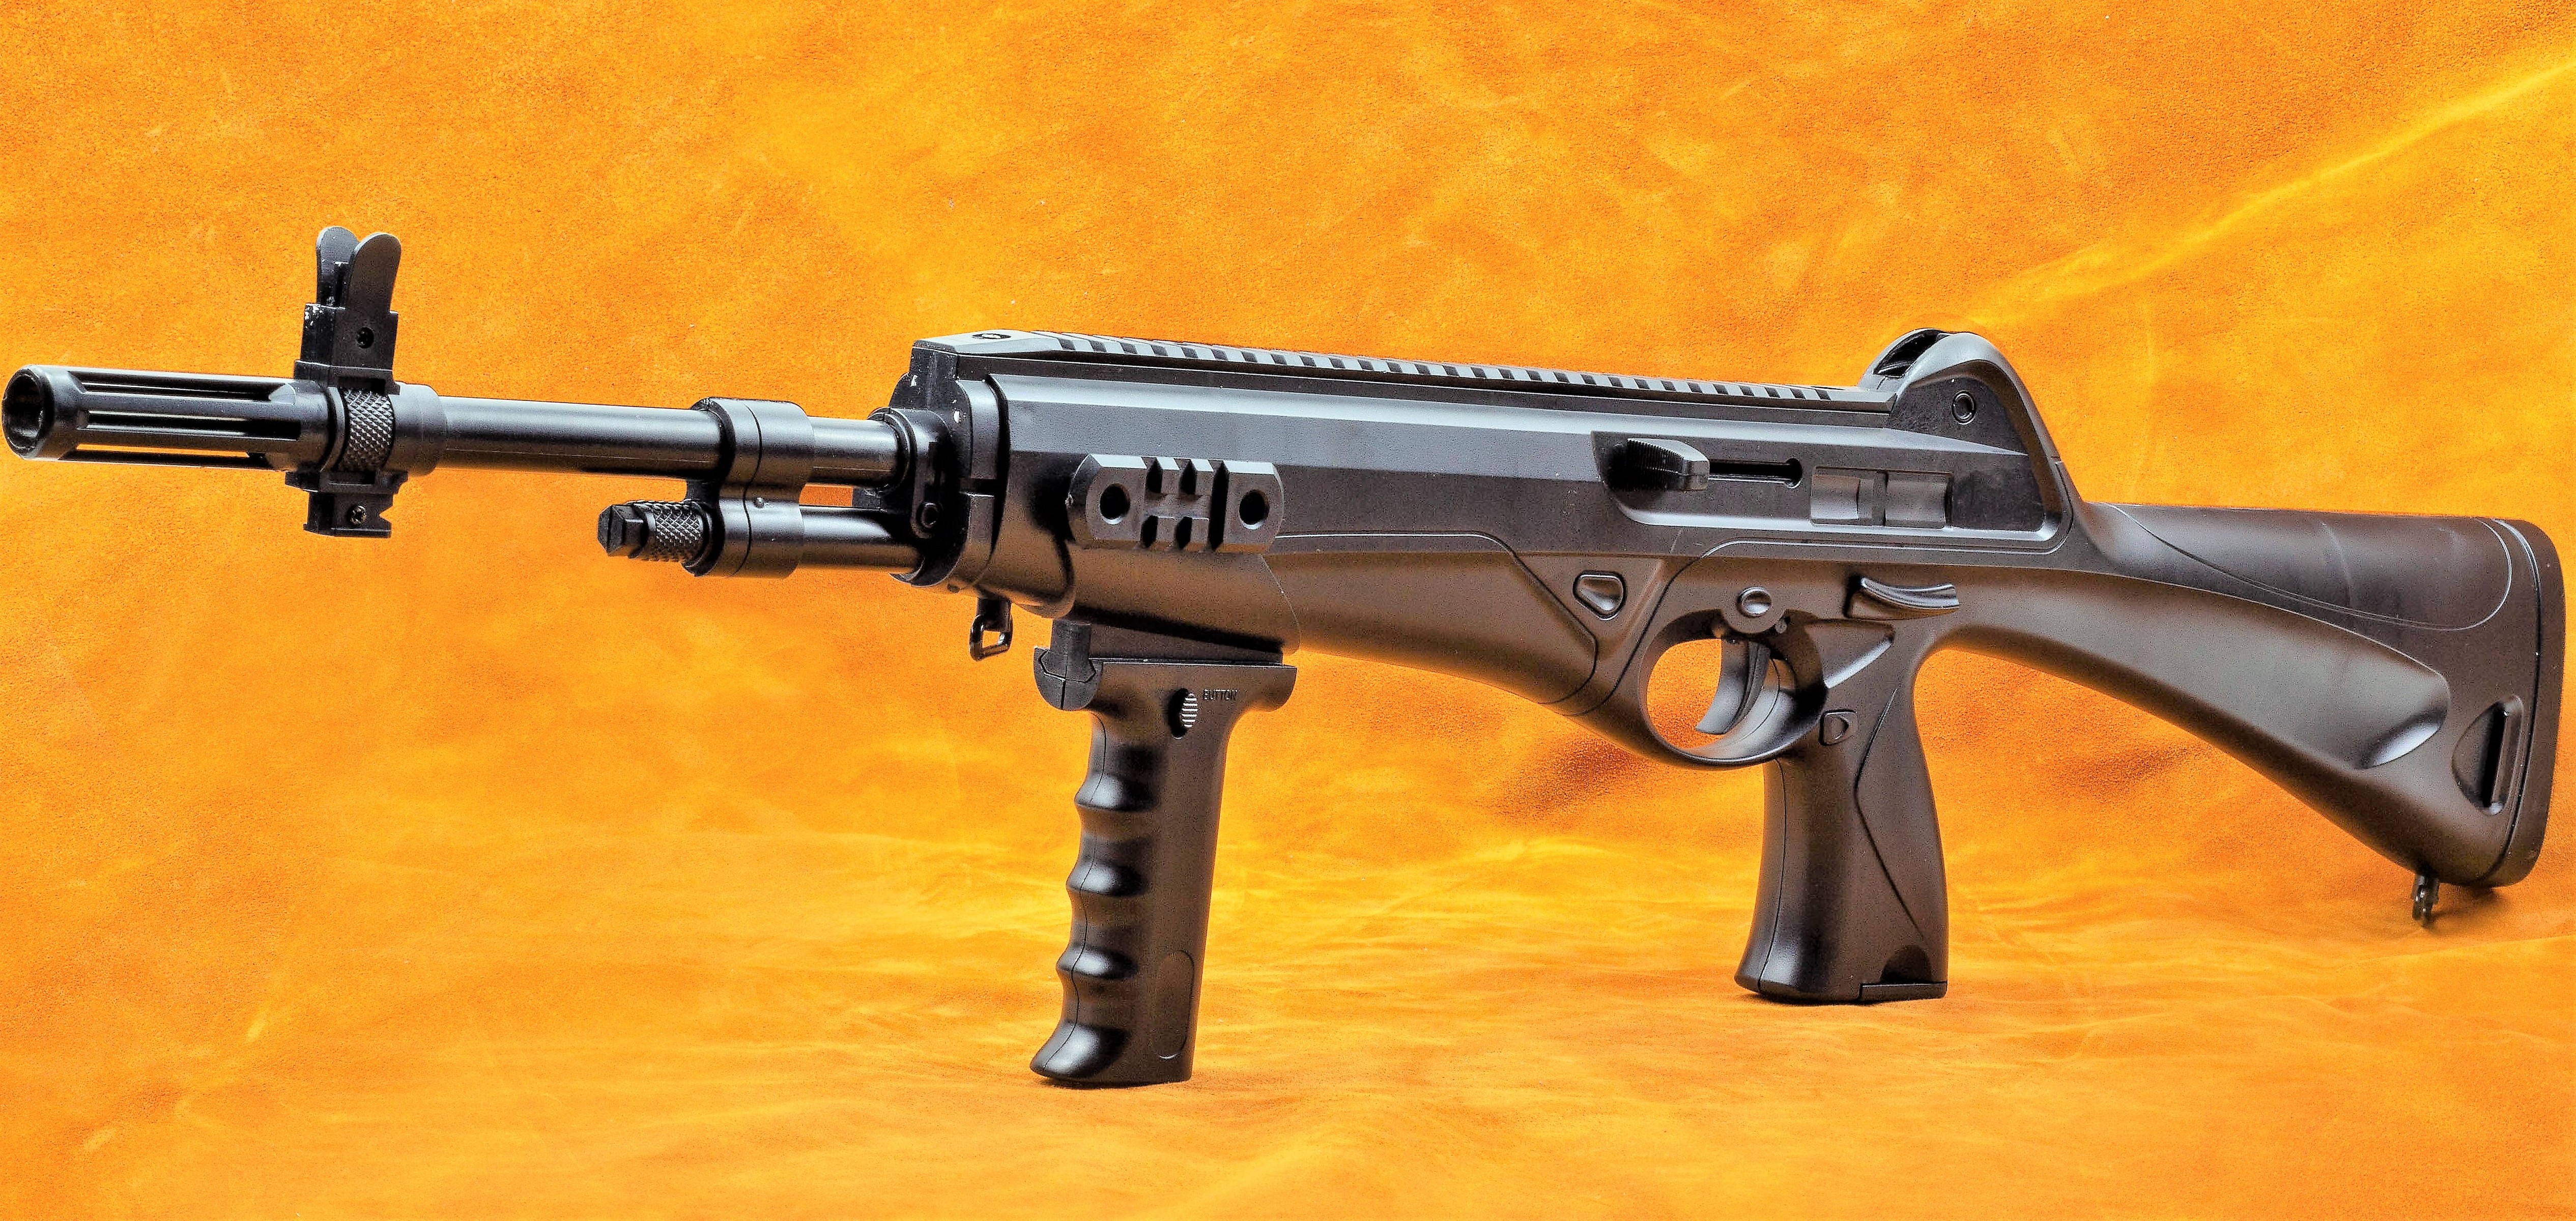 Gewehrs Waffen Erbsen Maschinengewehr Softair 8910 Plastik 79cm, 6mm, 0.5 Joul